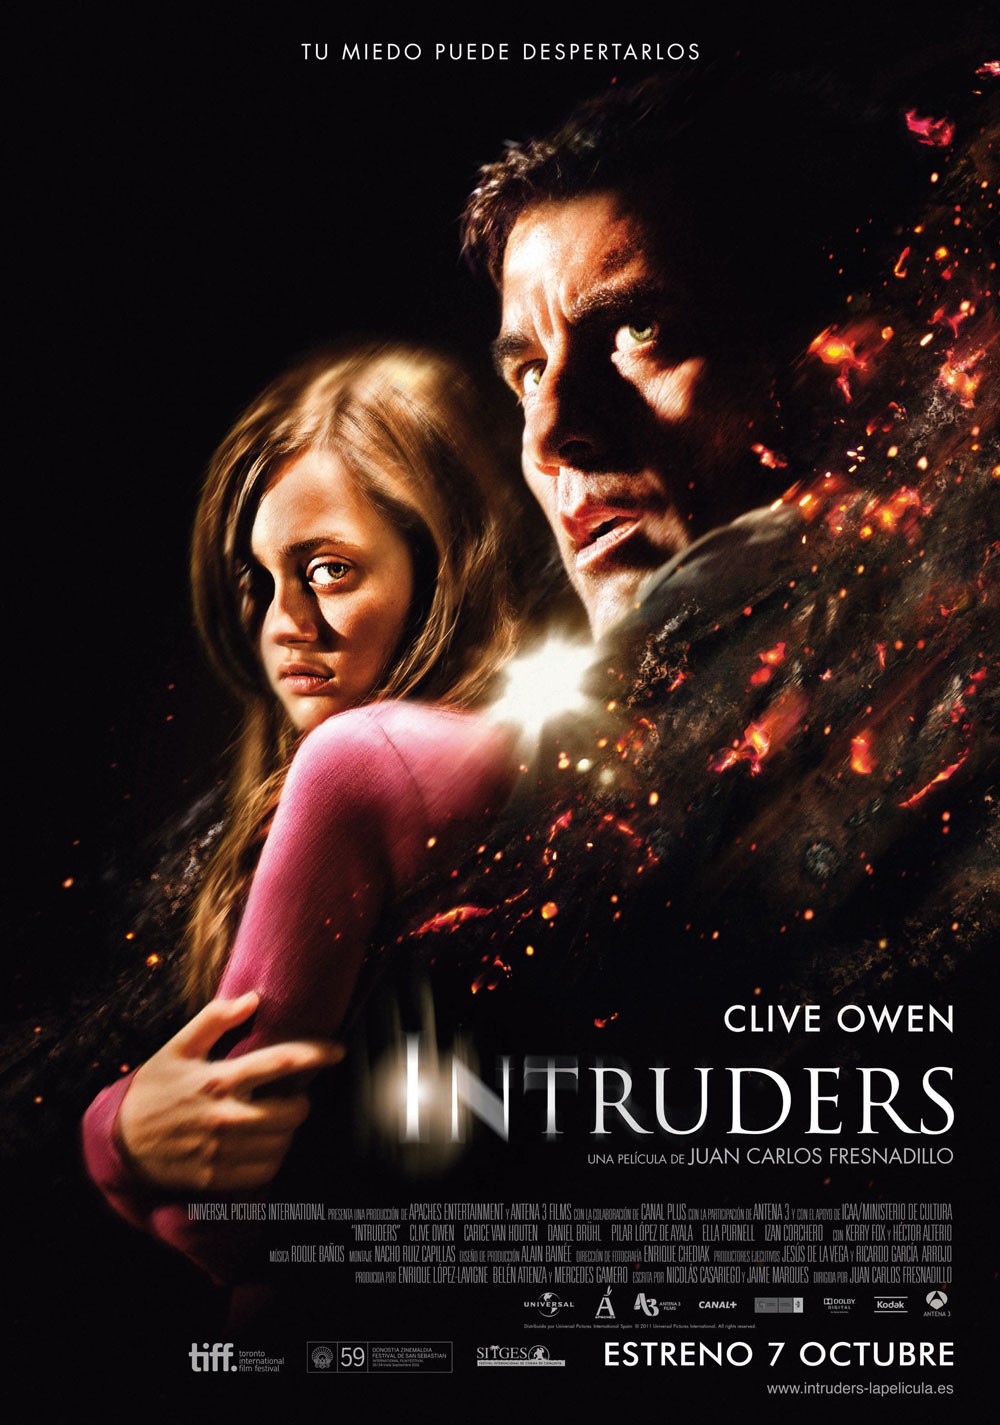 Soresport Movies: Intruders (2011) Horror Psychological